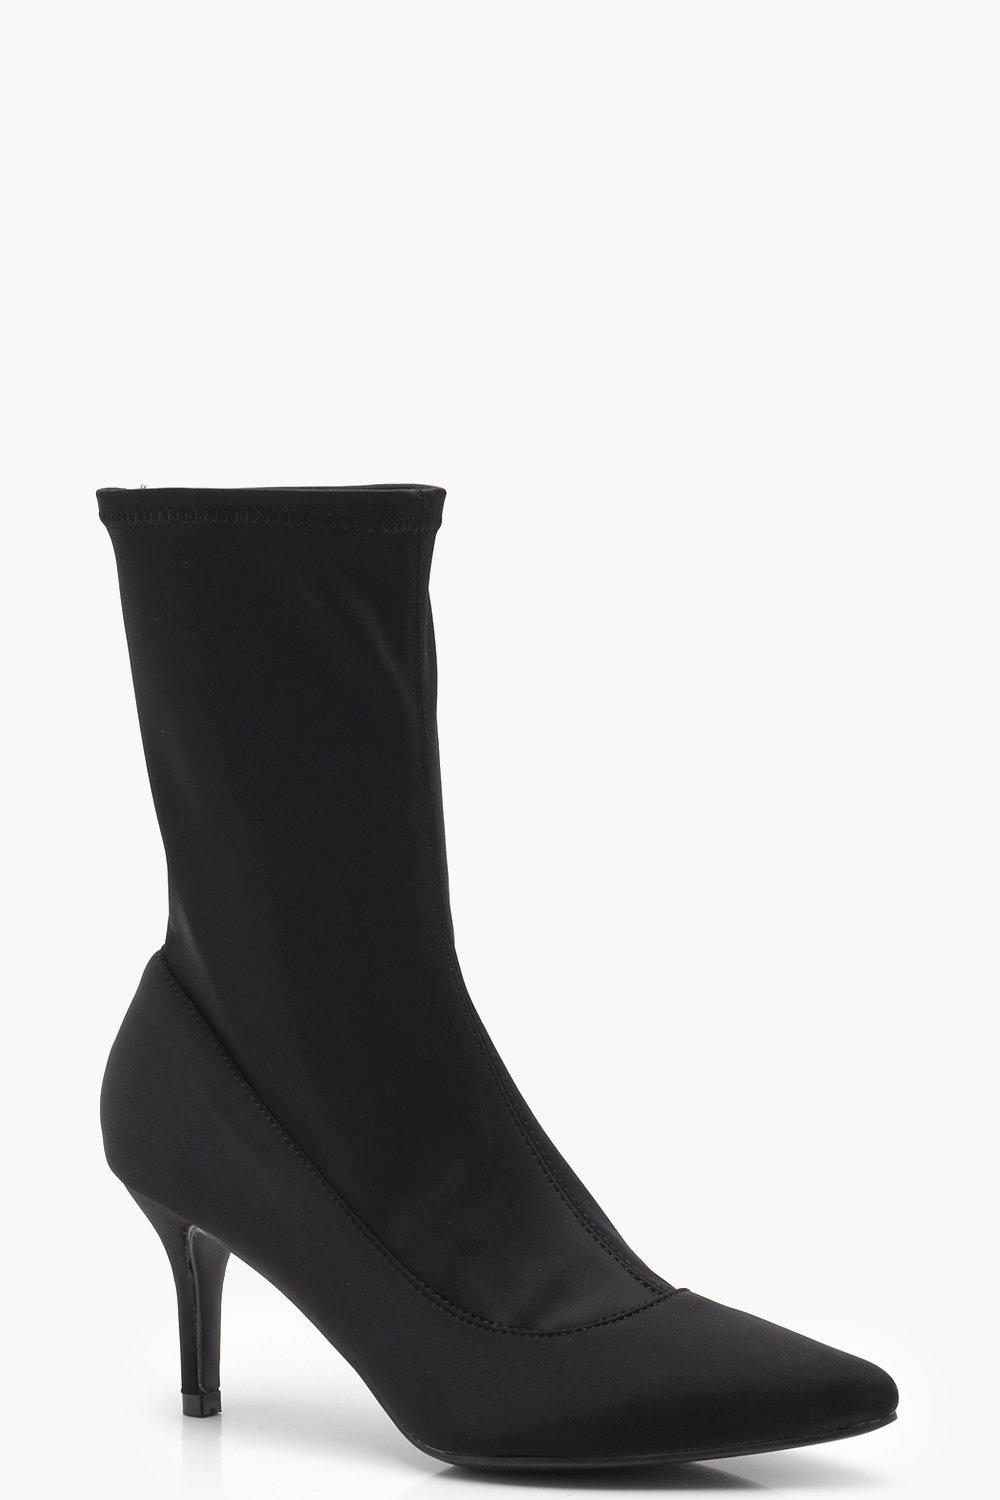 black sock boots uk